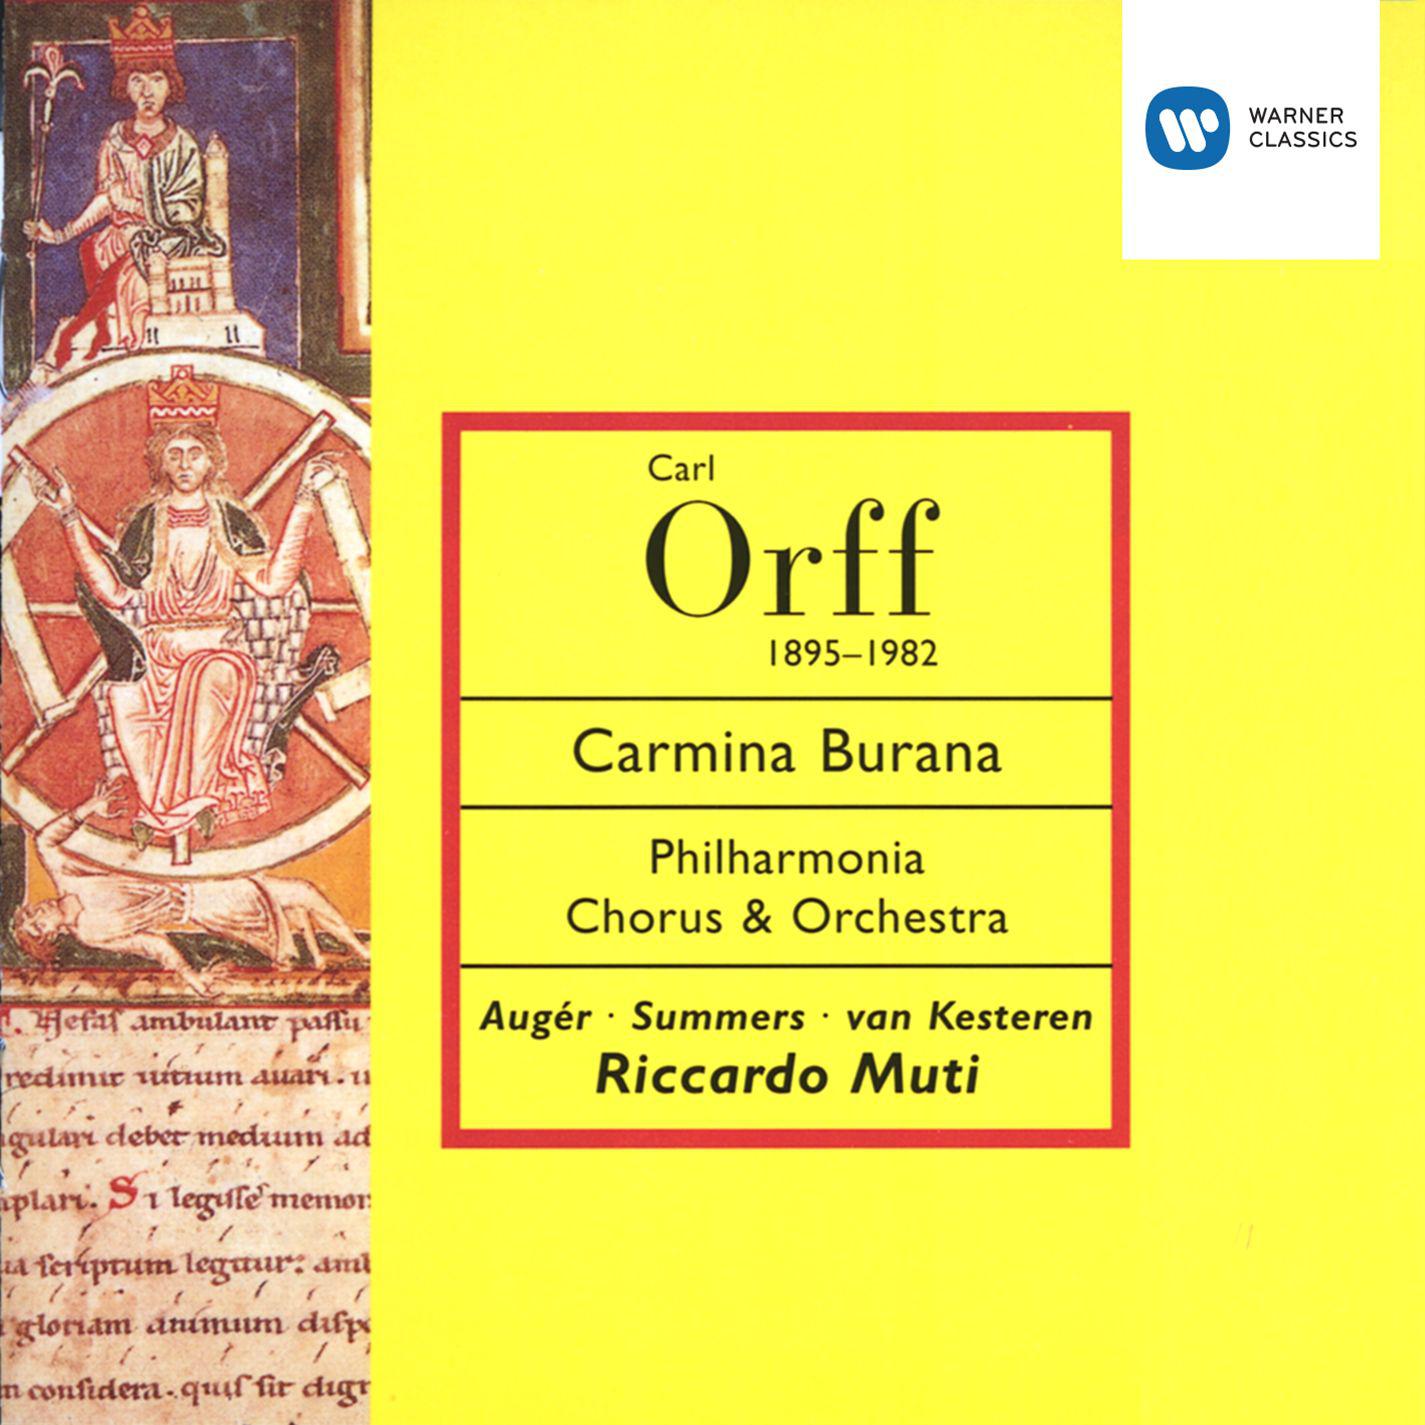 Carmina Burana: Introduction, Fortuna Imperatrix Mundi, No. 1 Chorus "O Fortuna"